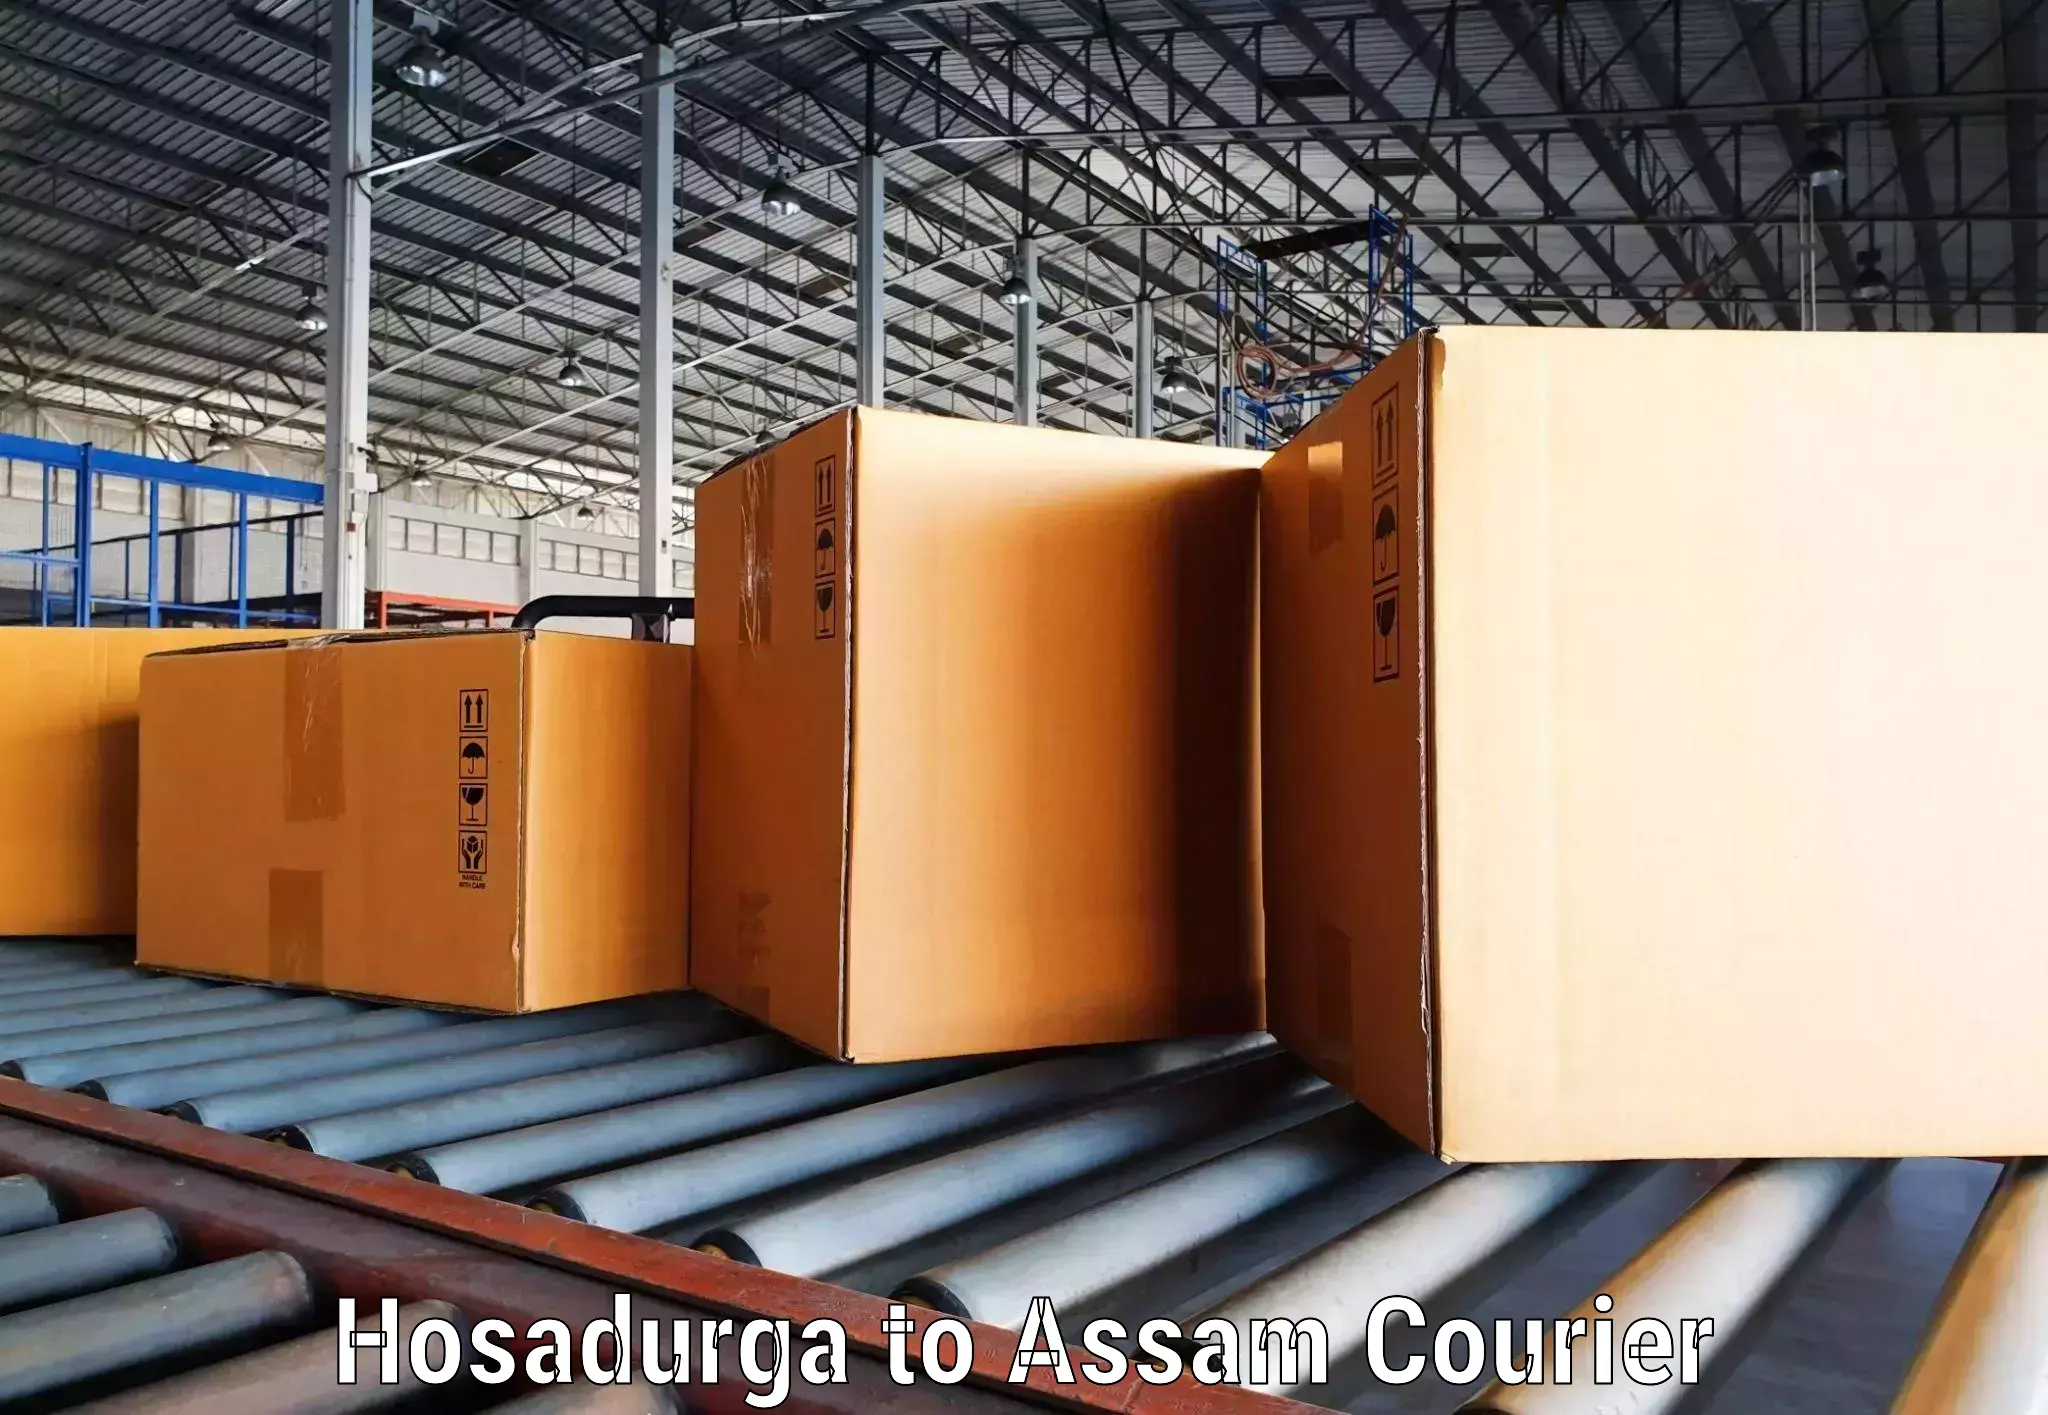 State-of-the-art courier technology Hosadurga to Nagaon